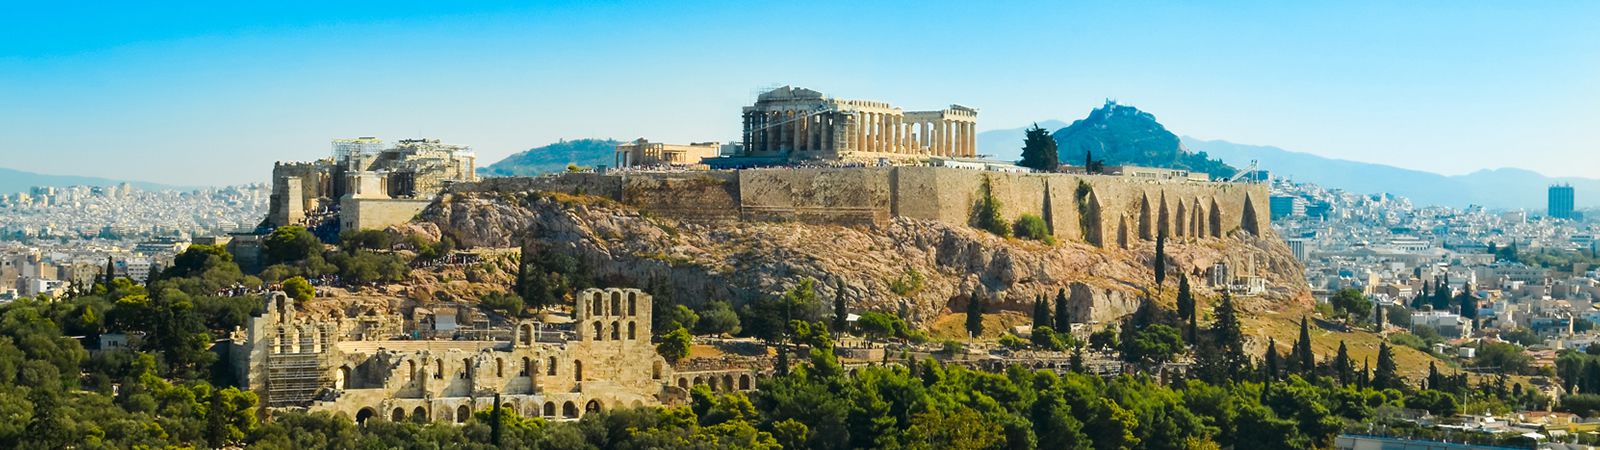 Acropolis bij Athene